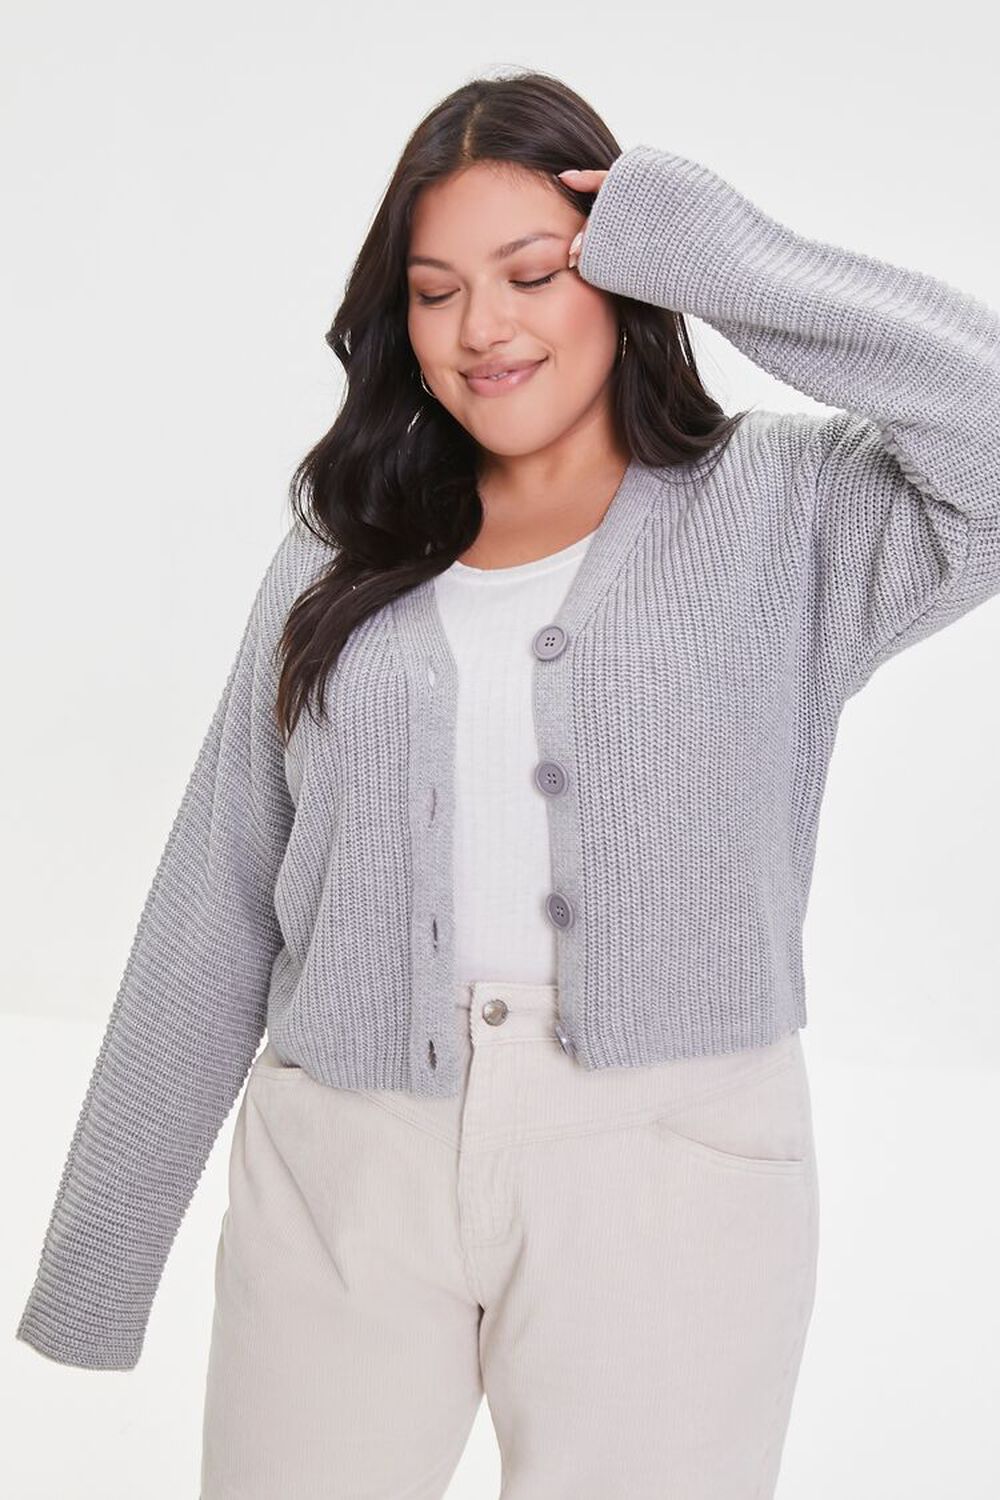 HEATHER GREY Plus Size Ribbed Cardigan Sweater, image 1